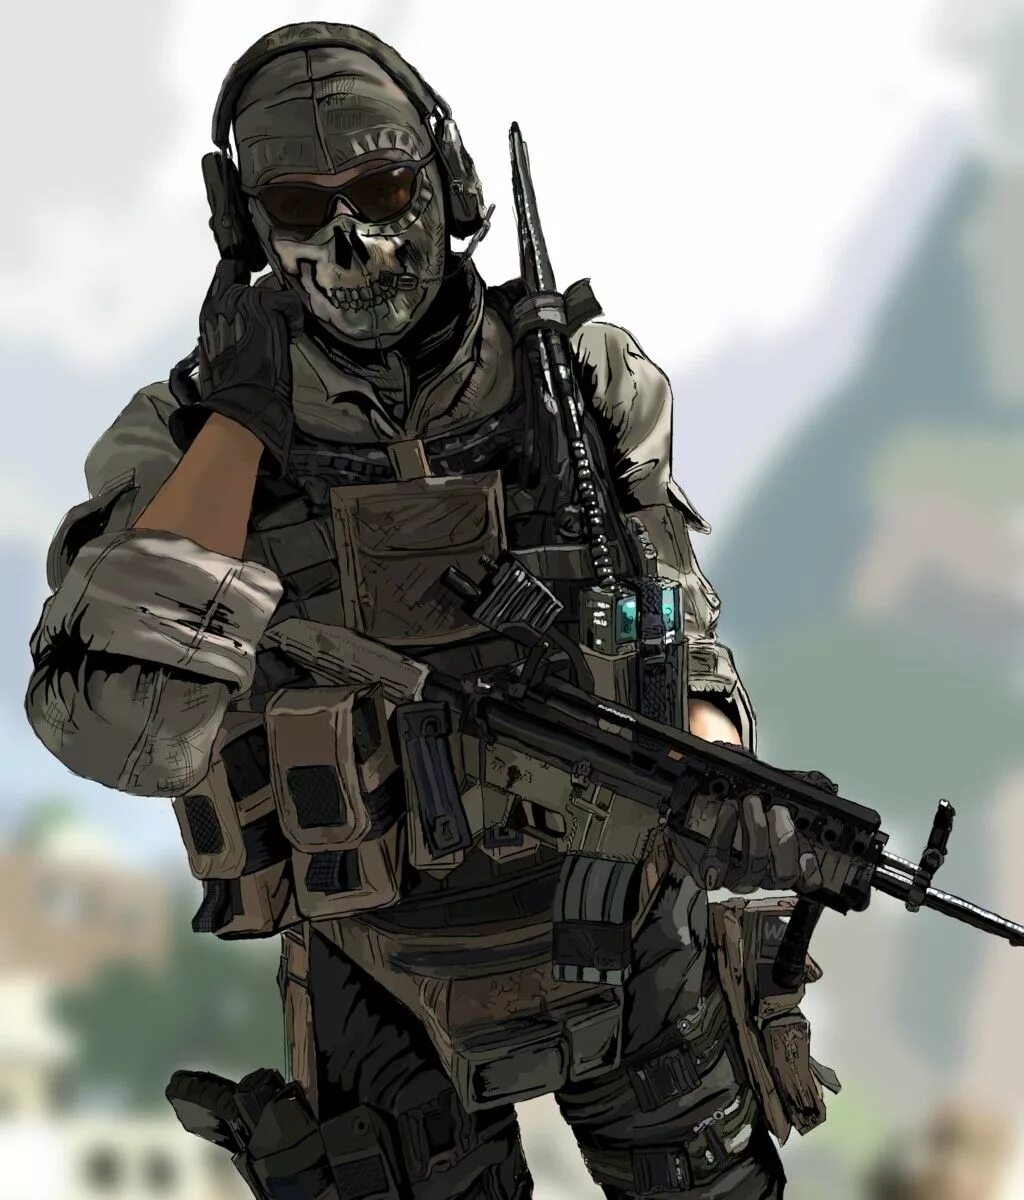 Саймон "гоуст" Райли. Саймон гоуст Райли Call of Duty. Call of Duty Modern Warfare 2 гоуст. Саймон гоуст Райли Call of Duty Modern Warfare 2.